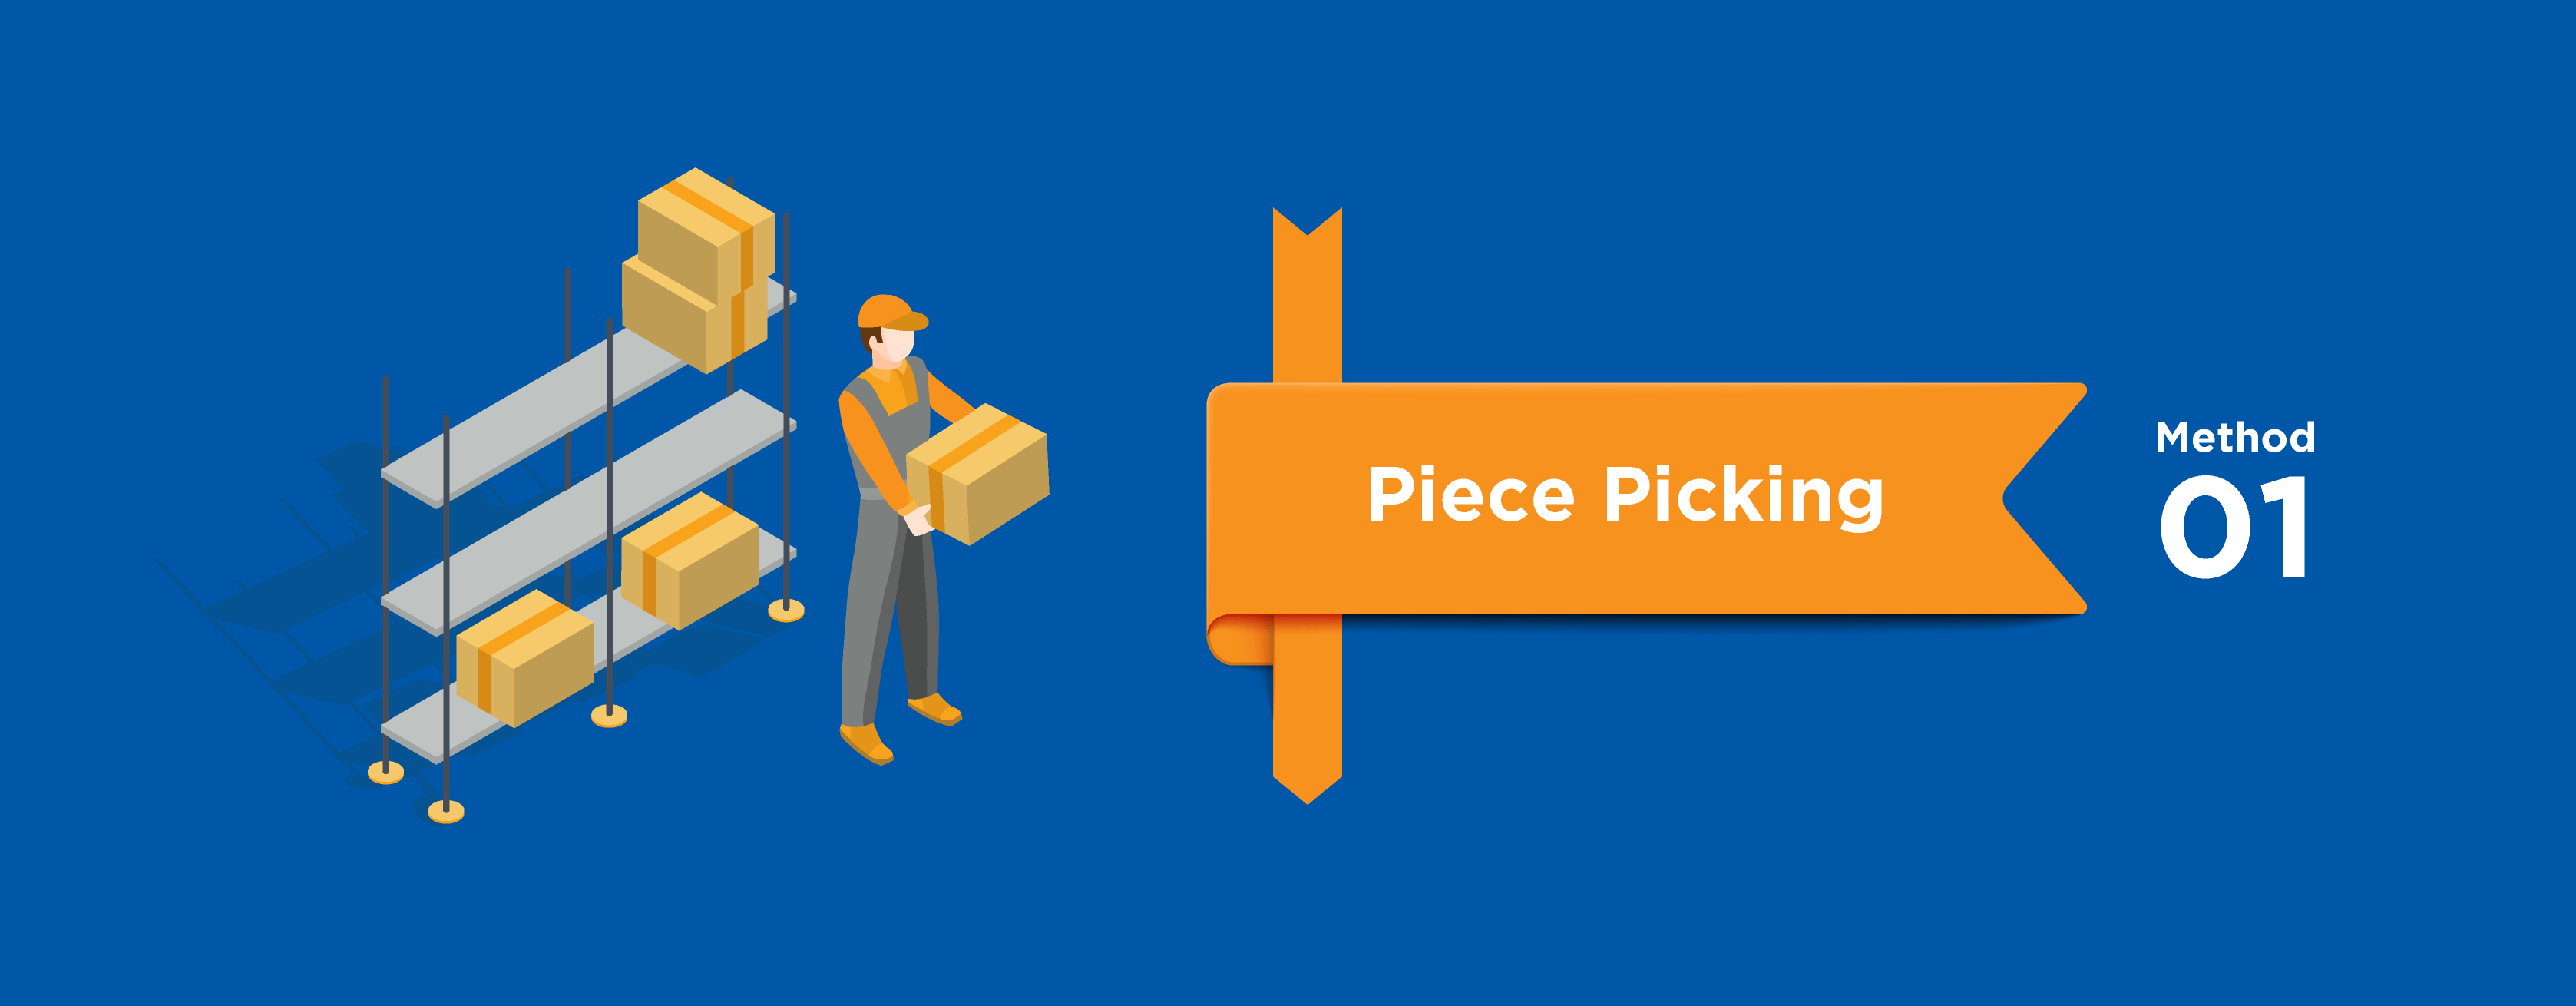 Piece-Picking